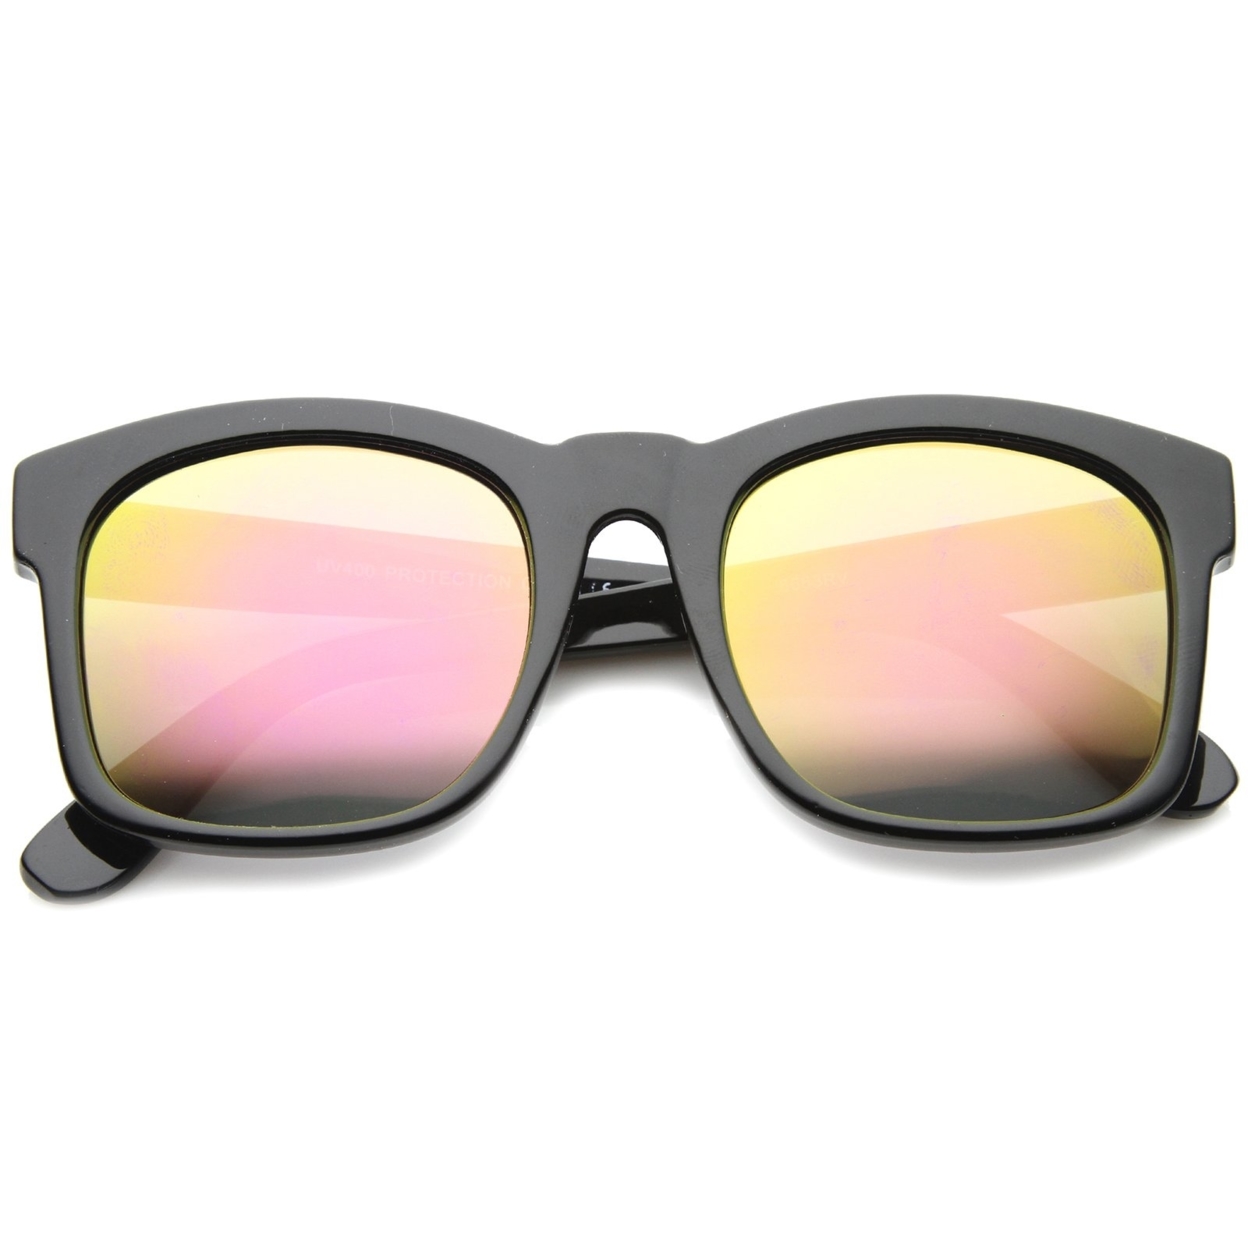 Mod Fashion Oversized Bold Frame Flash Mirror Horn Rimmed Sunglasses 61mm - Black / Magenta